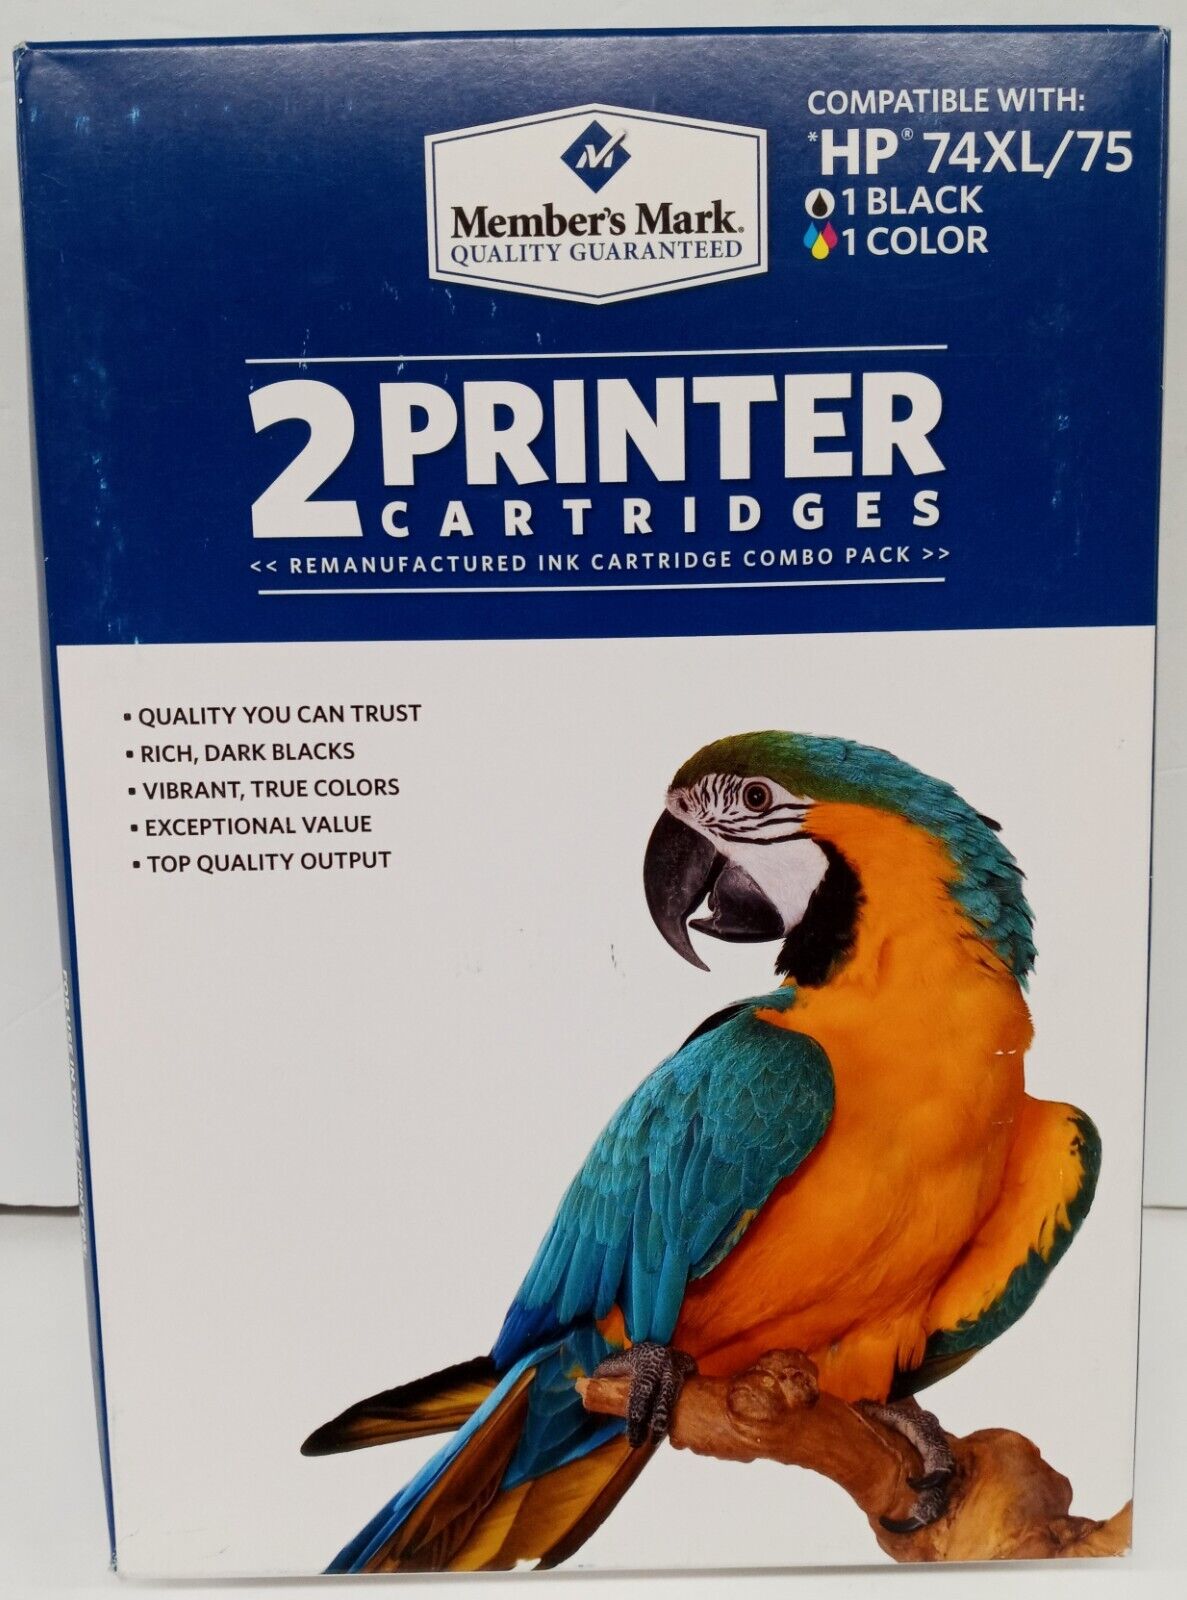 Member's Mark 2 Printer Remanufactured Ink Cartridge Combo Packs 1 Black 1 Color